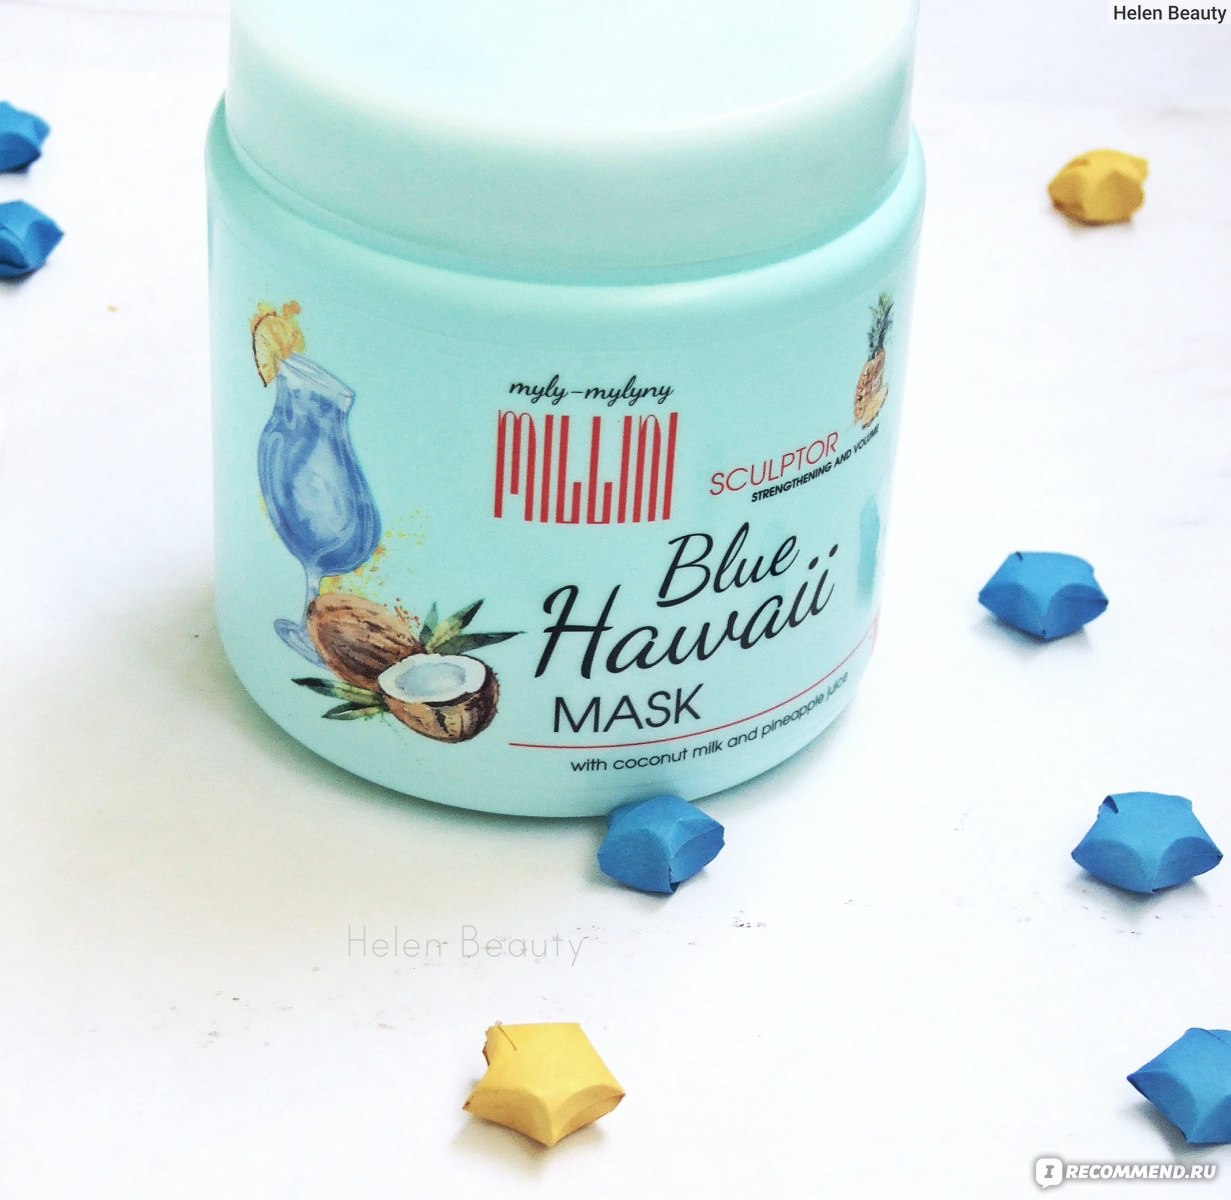 Маска для волос myly-mylyny millini blue hawaii